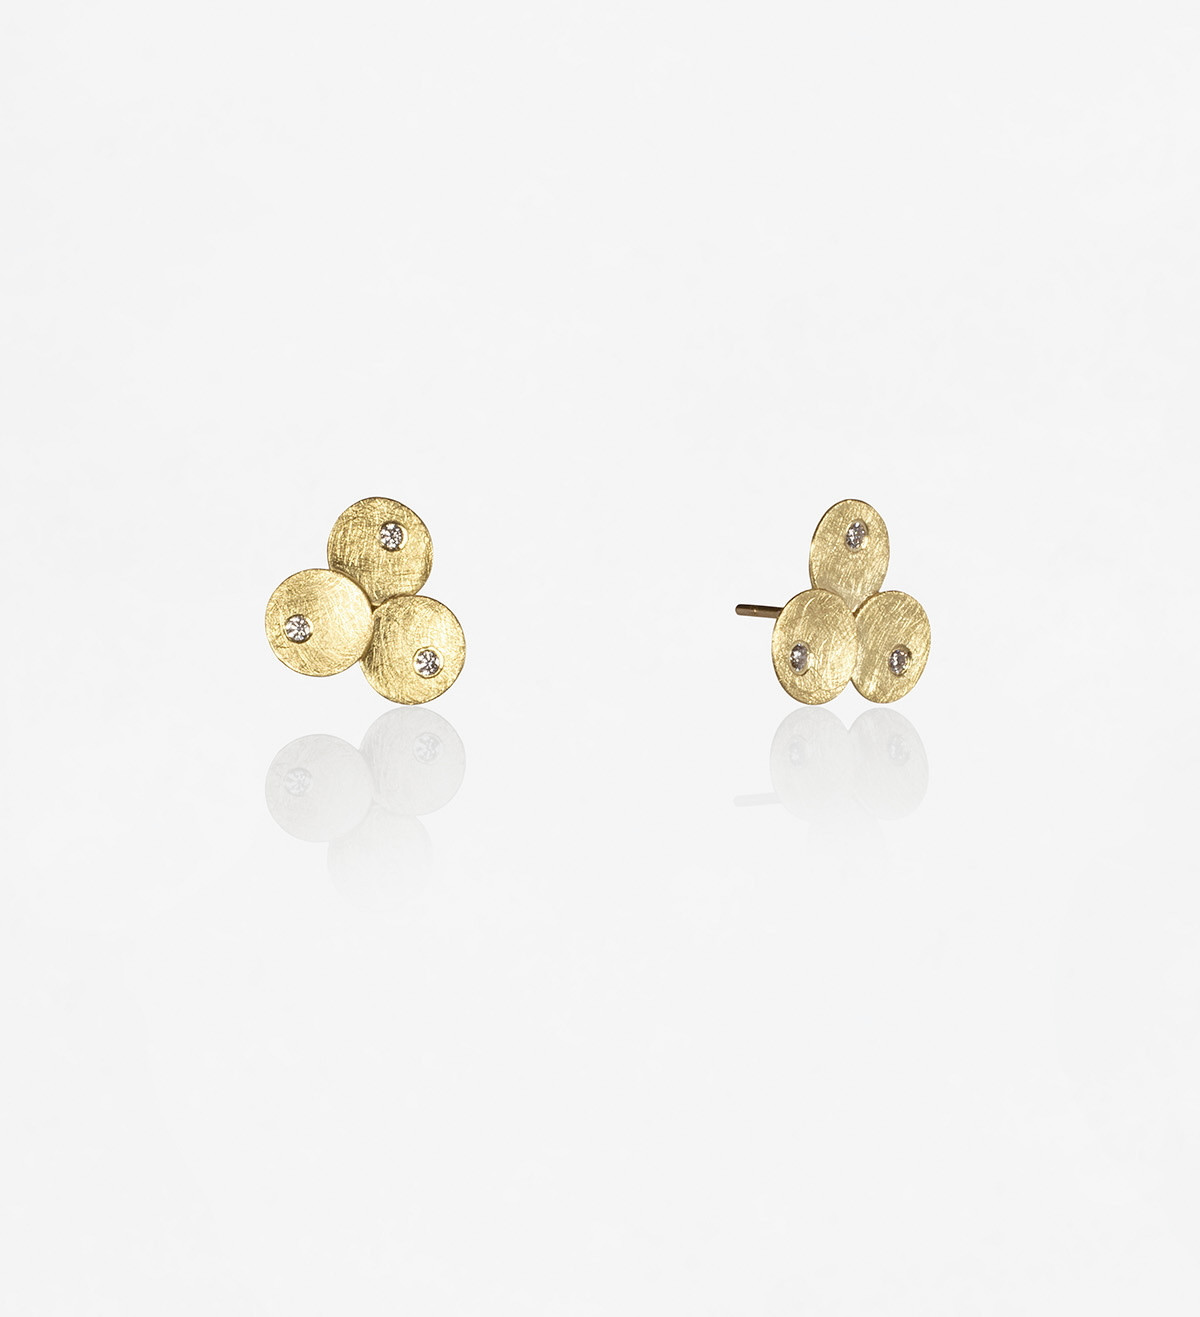 18k gold earrings Flô with diamonds 0,15ct